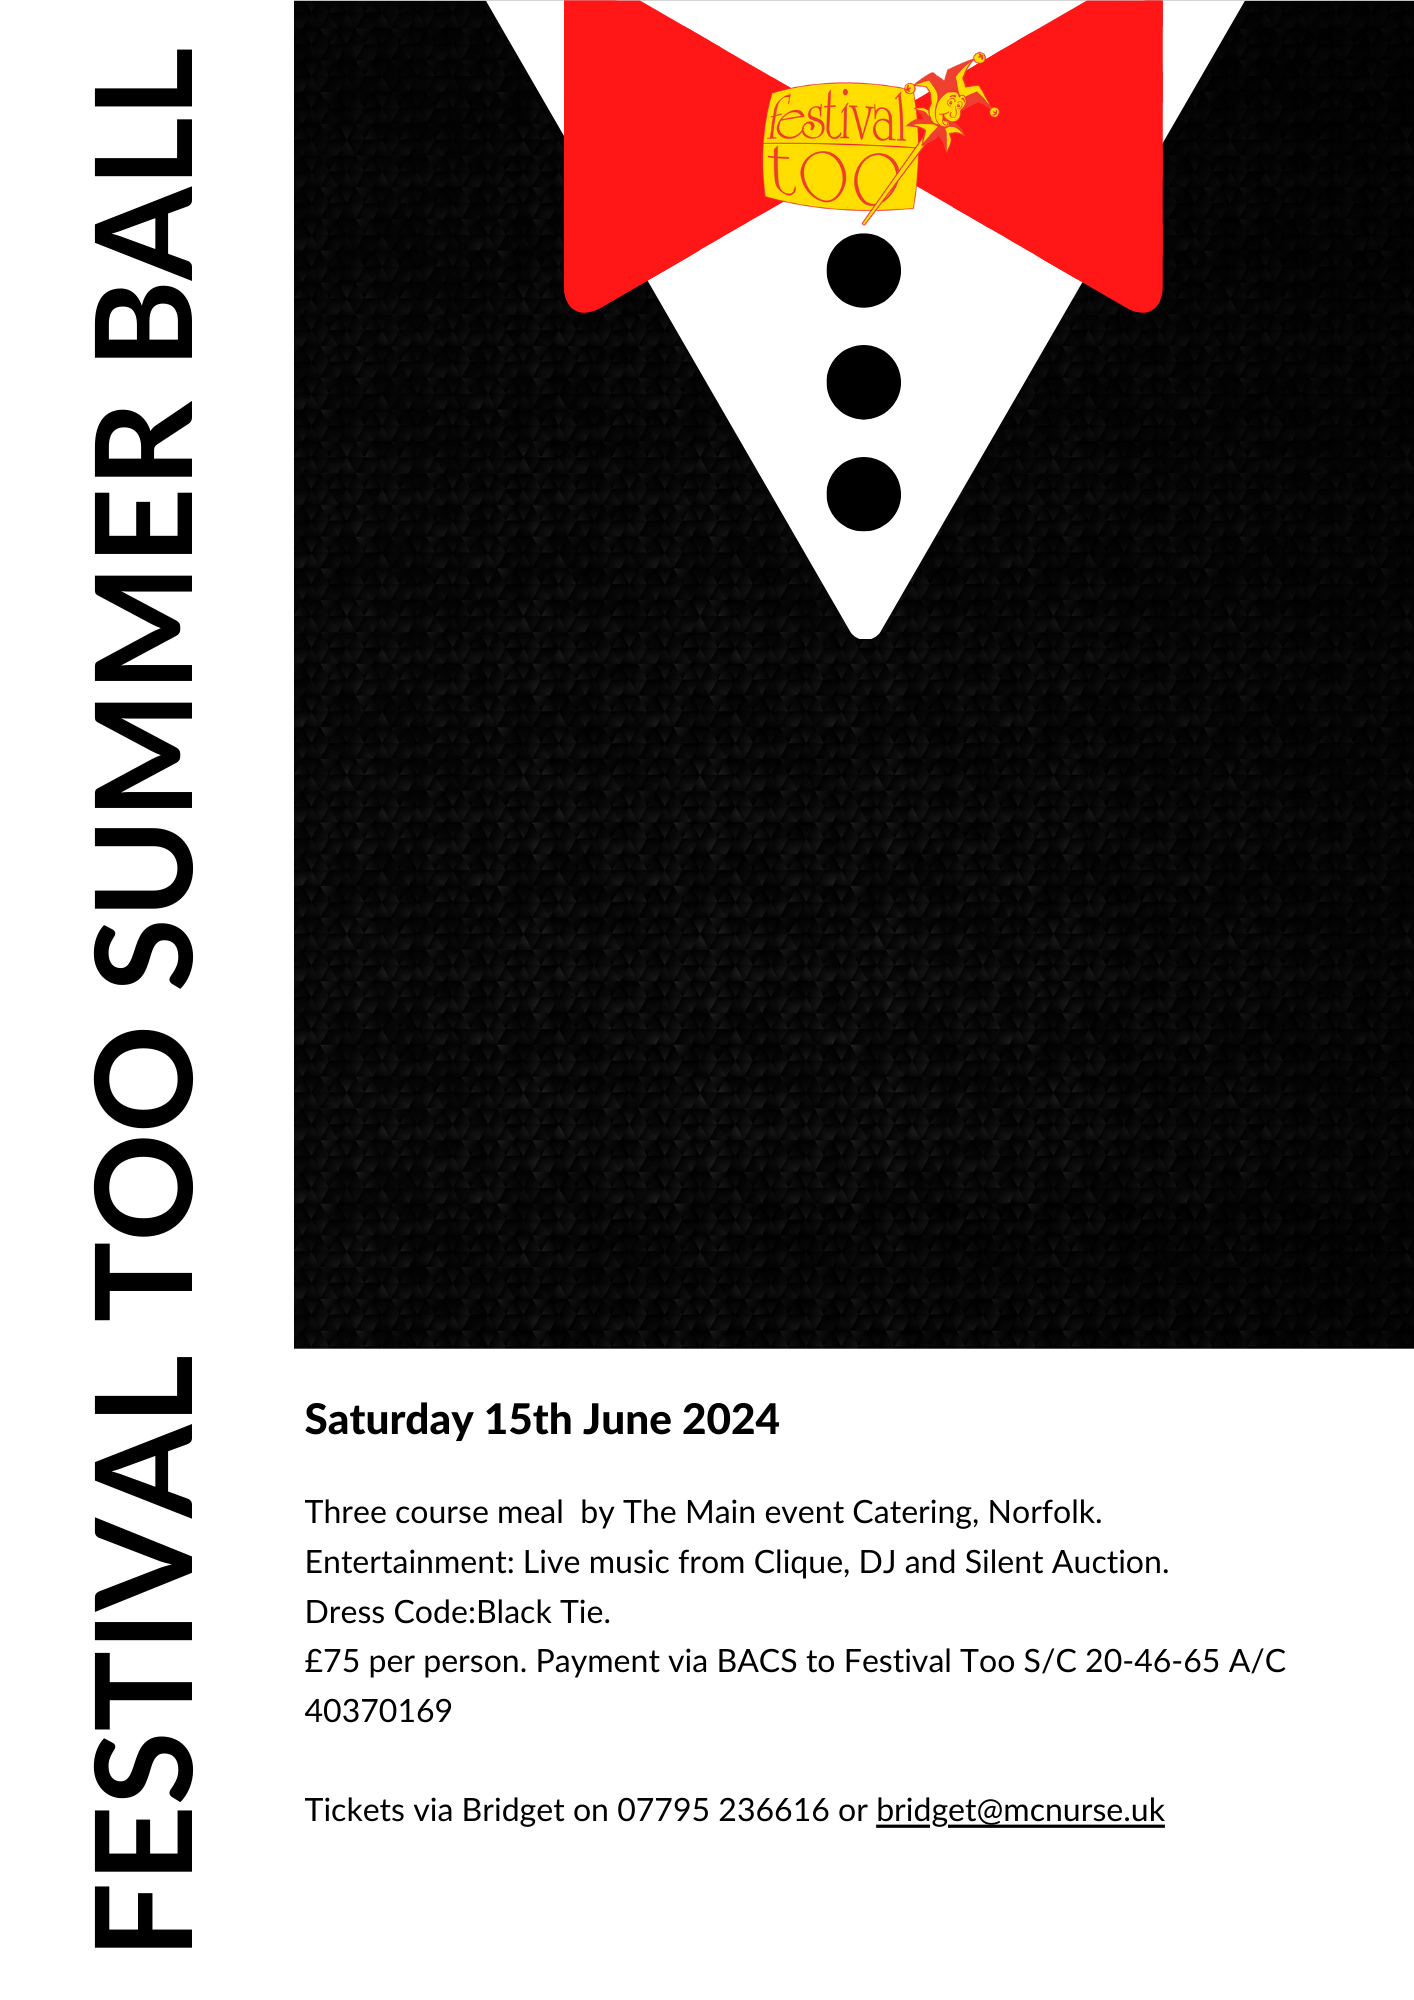 Festival Too Ball Invite June 2023